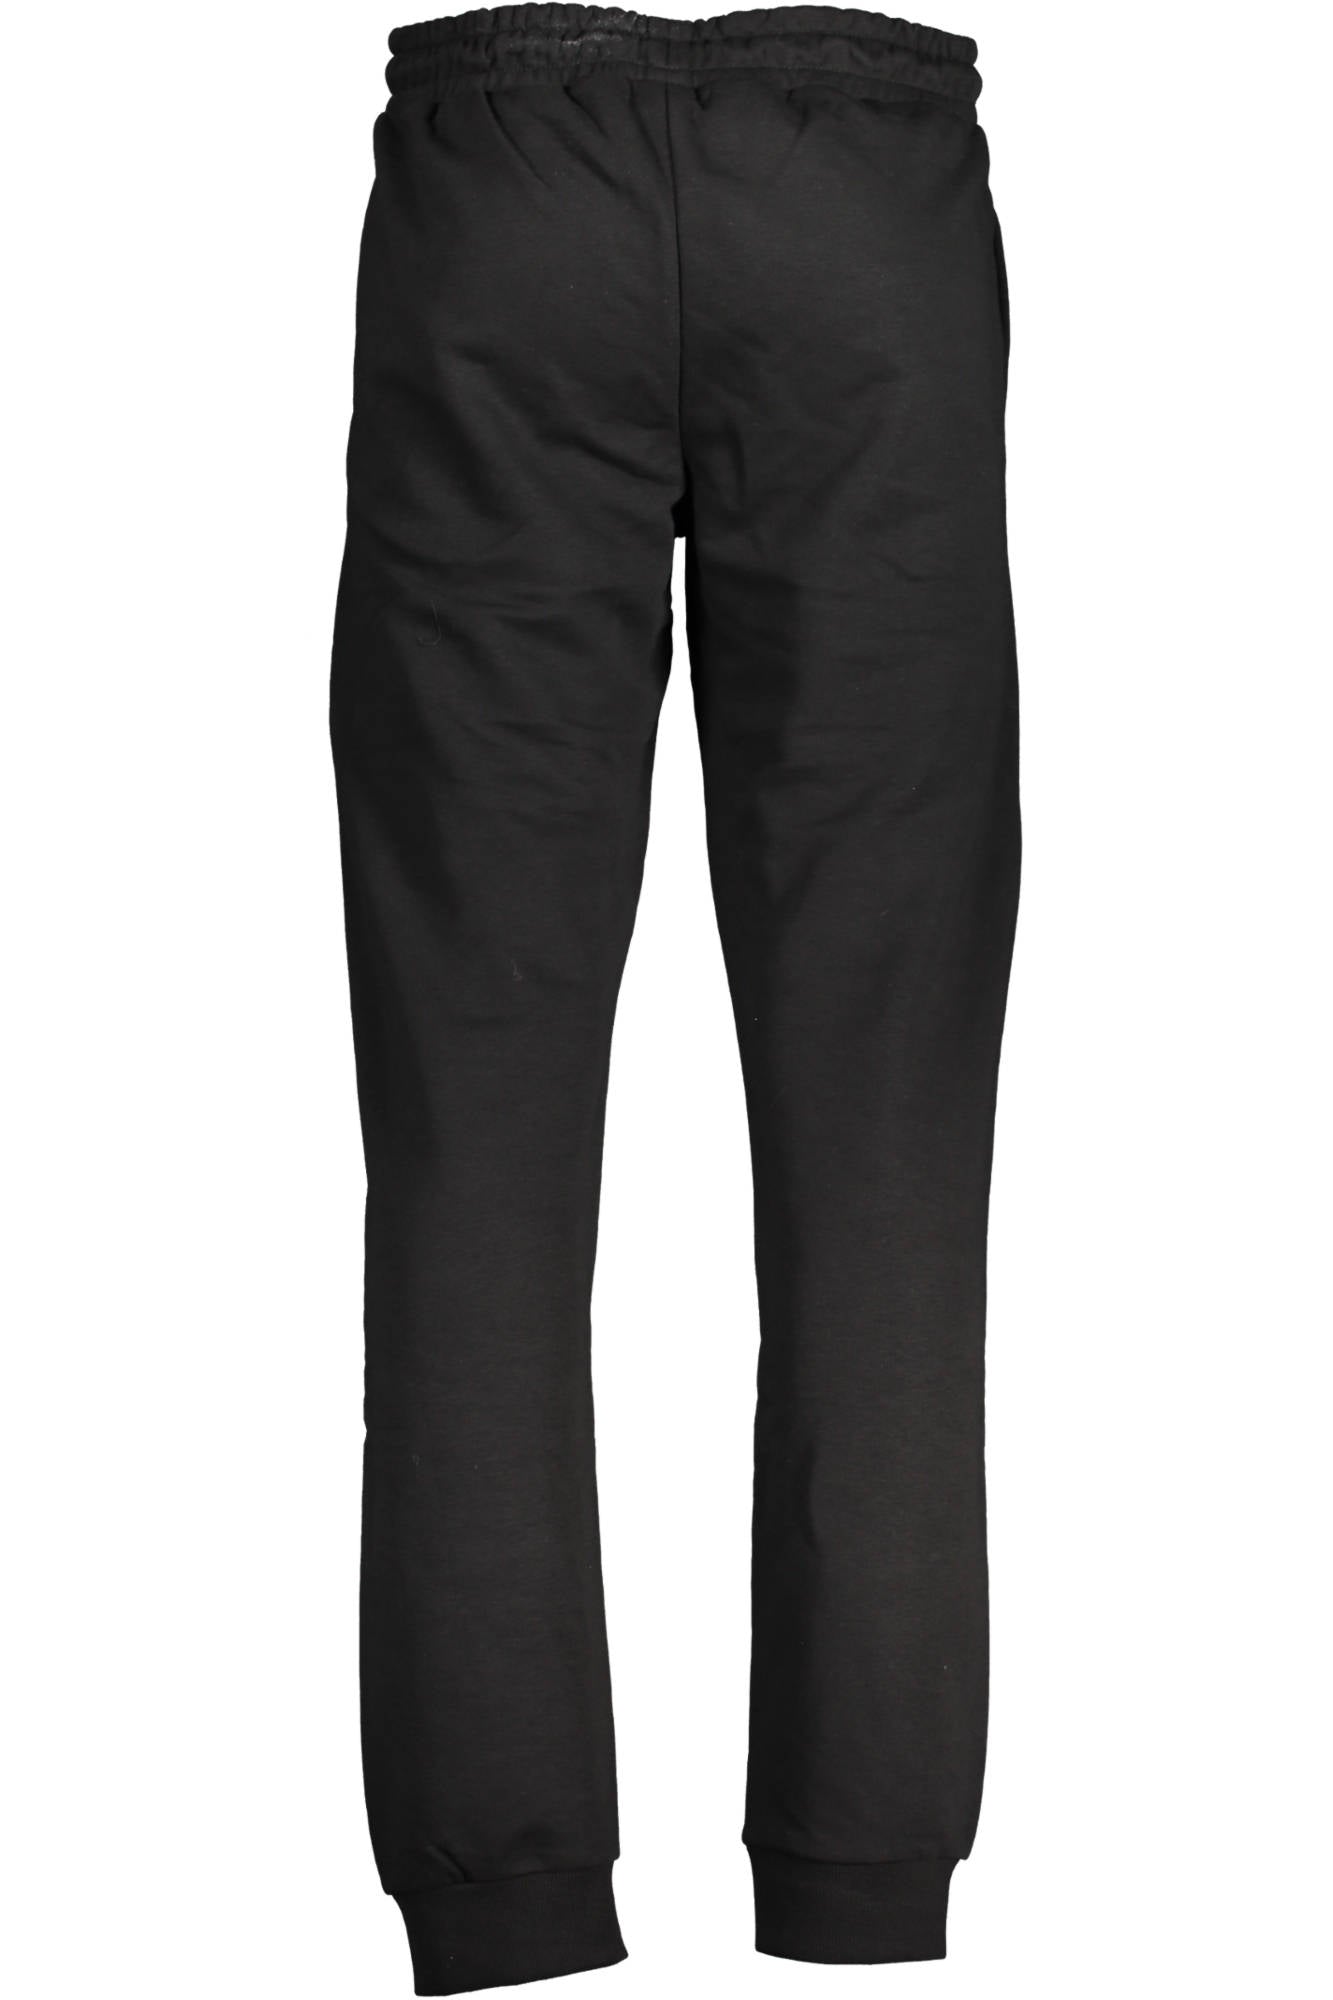 Fila Black Cotton Jeans & Pant - Fizigo